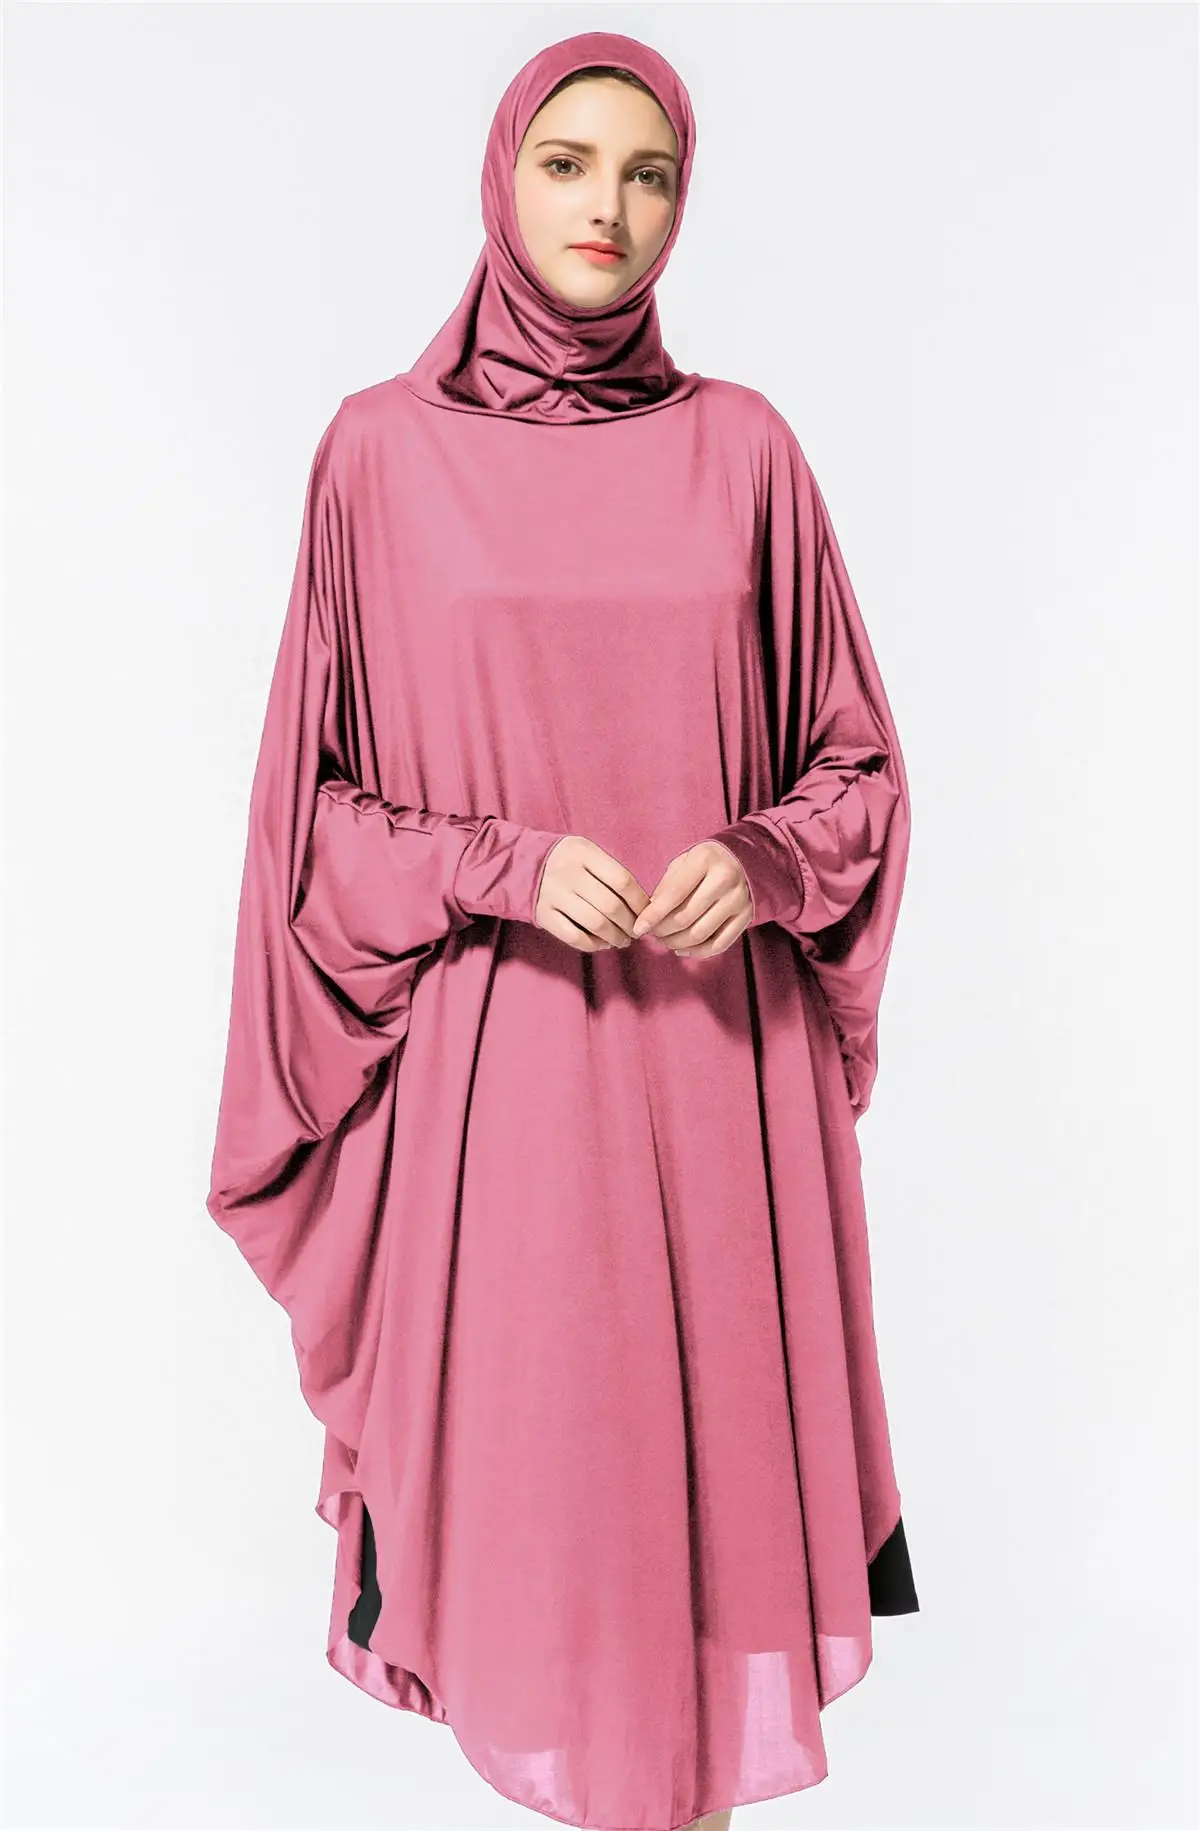 

New Women Muslim Worship Lady Thobe Gown Hijab Prayer Bat Sleeve Middle East Robe Islamic With Hood Abaya Praying Hijab Dress